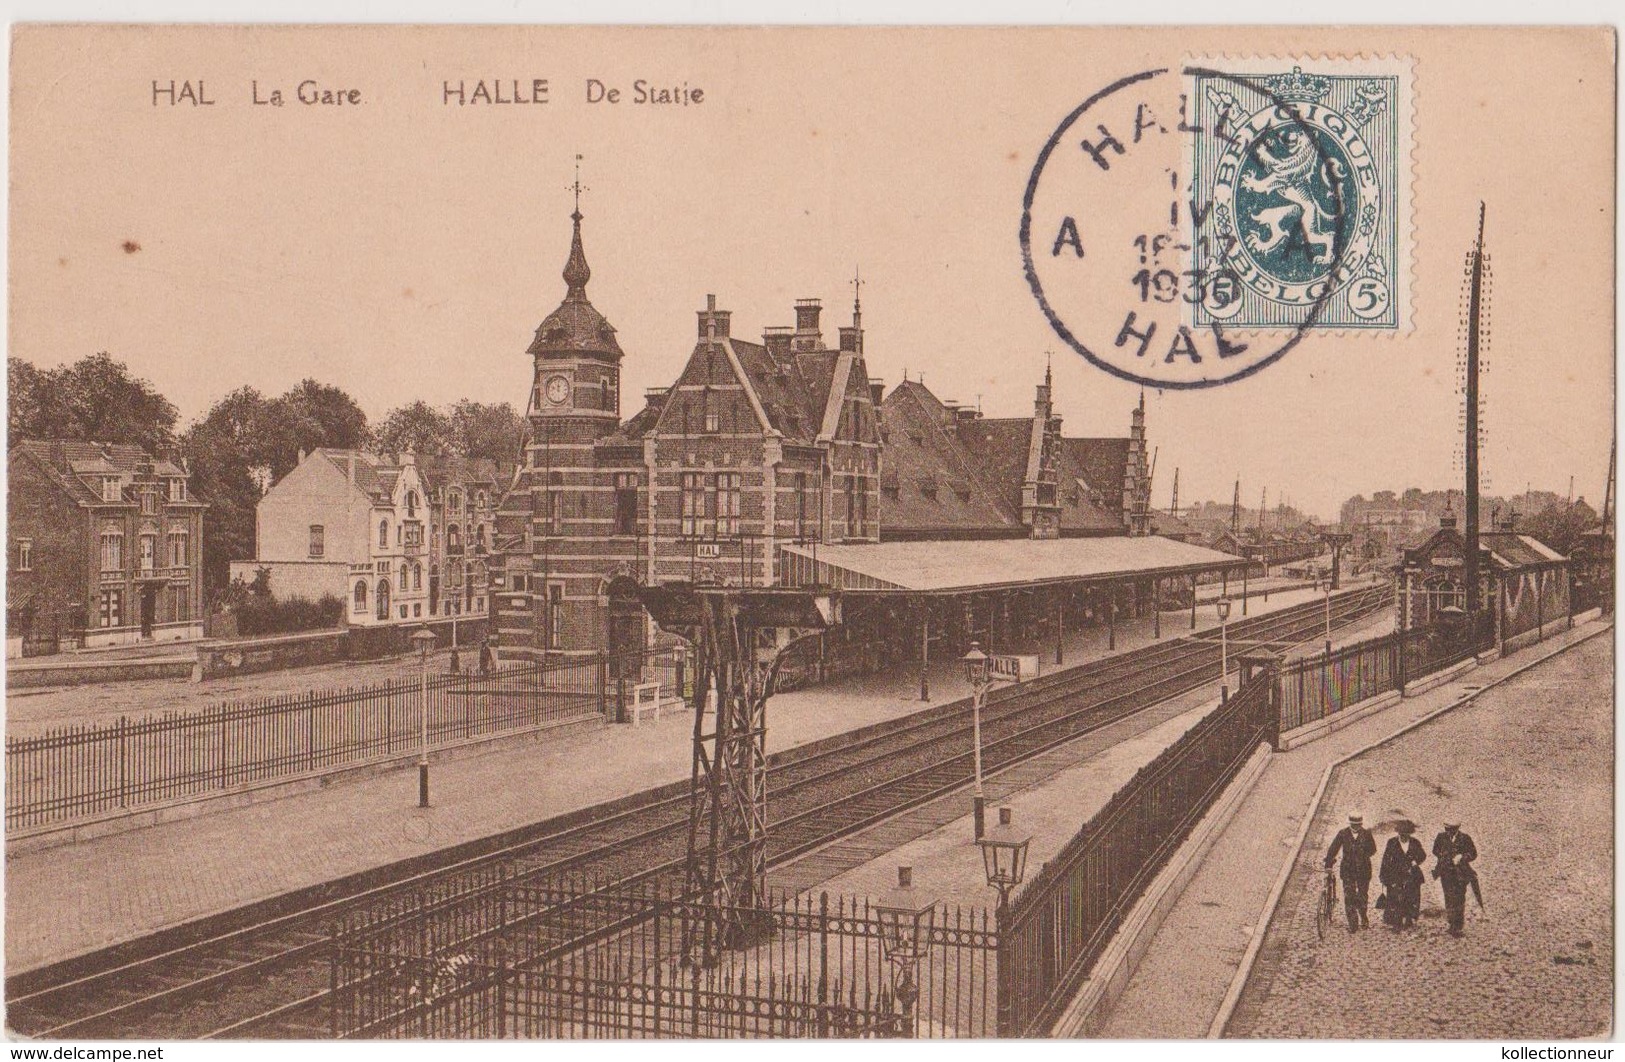 HALLE - HAL De Statie - La Gare - Halle